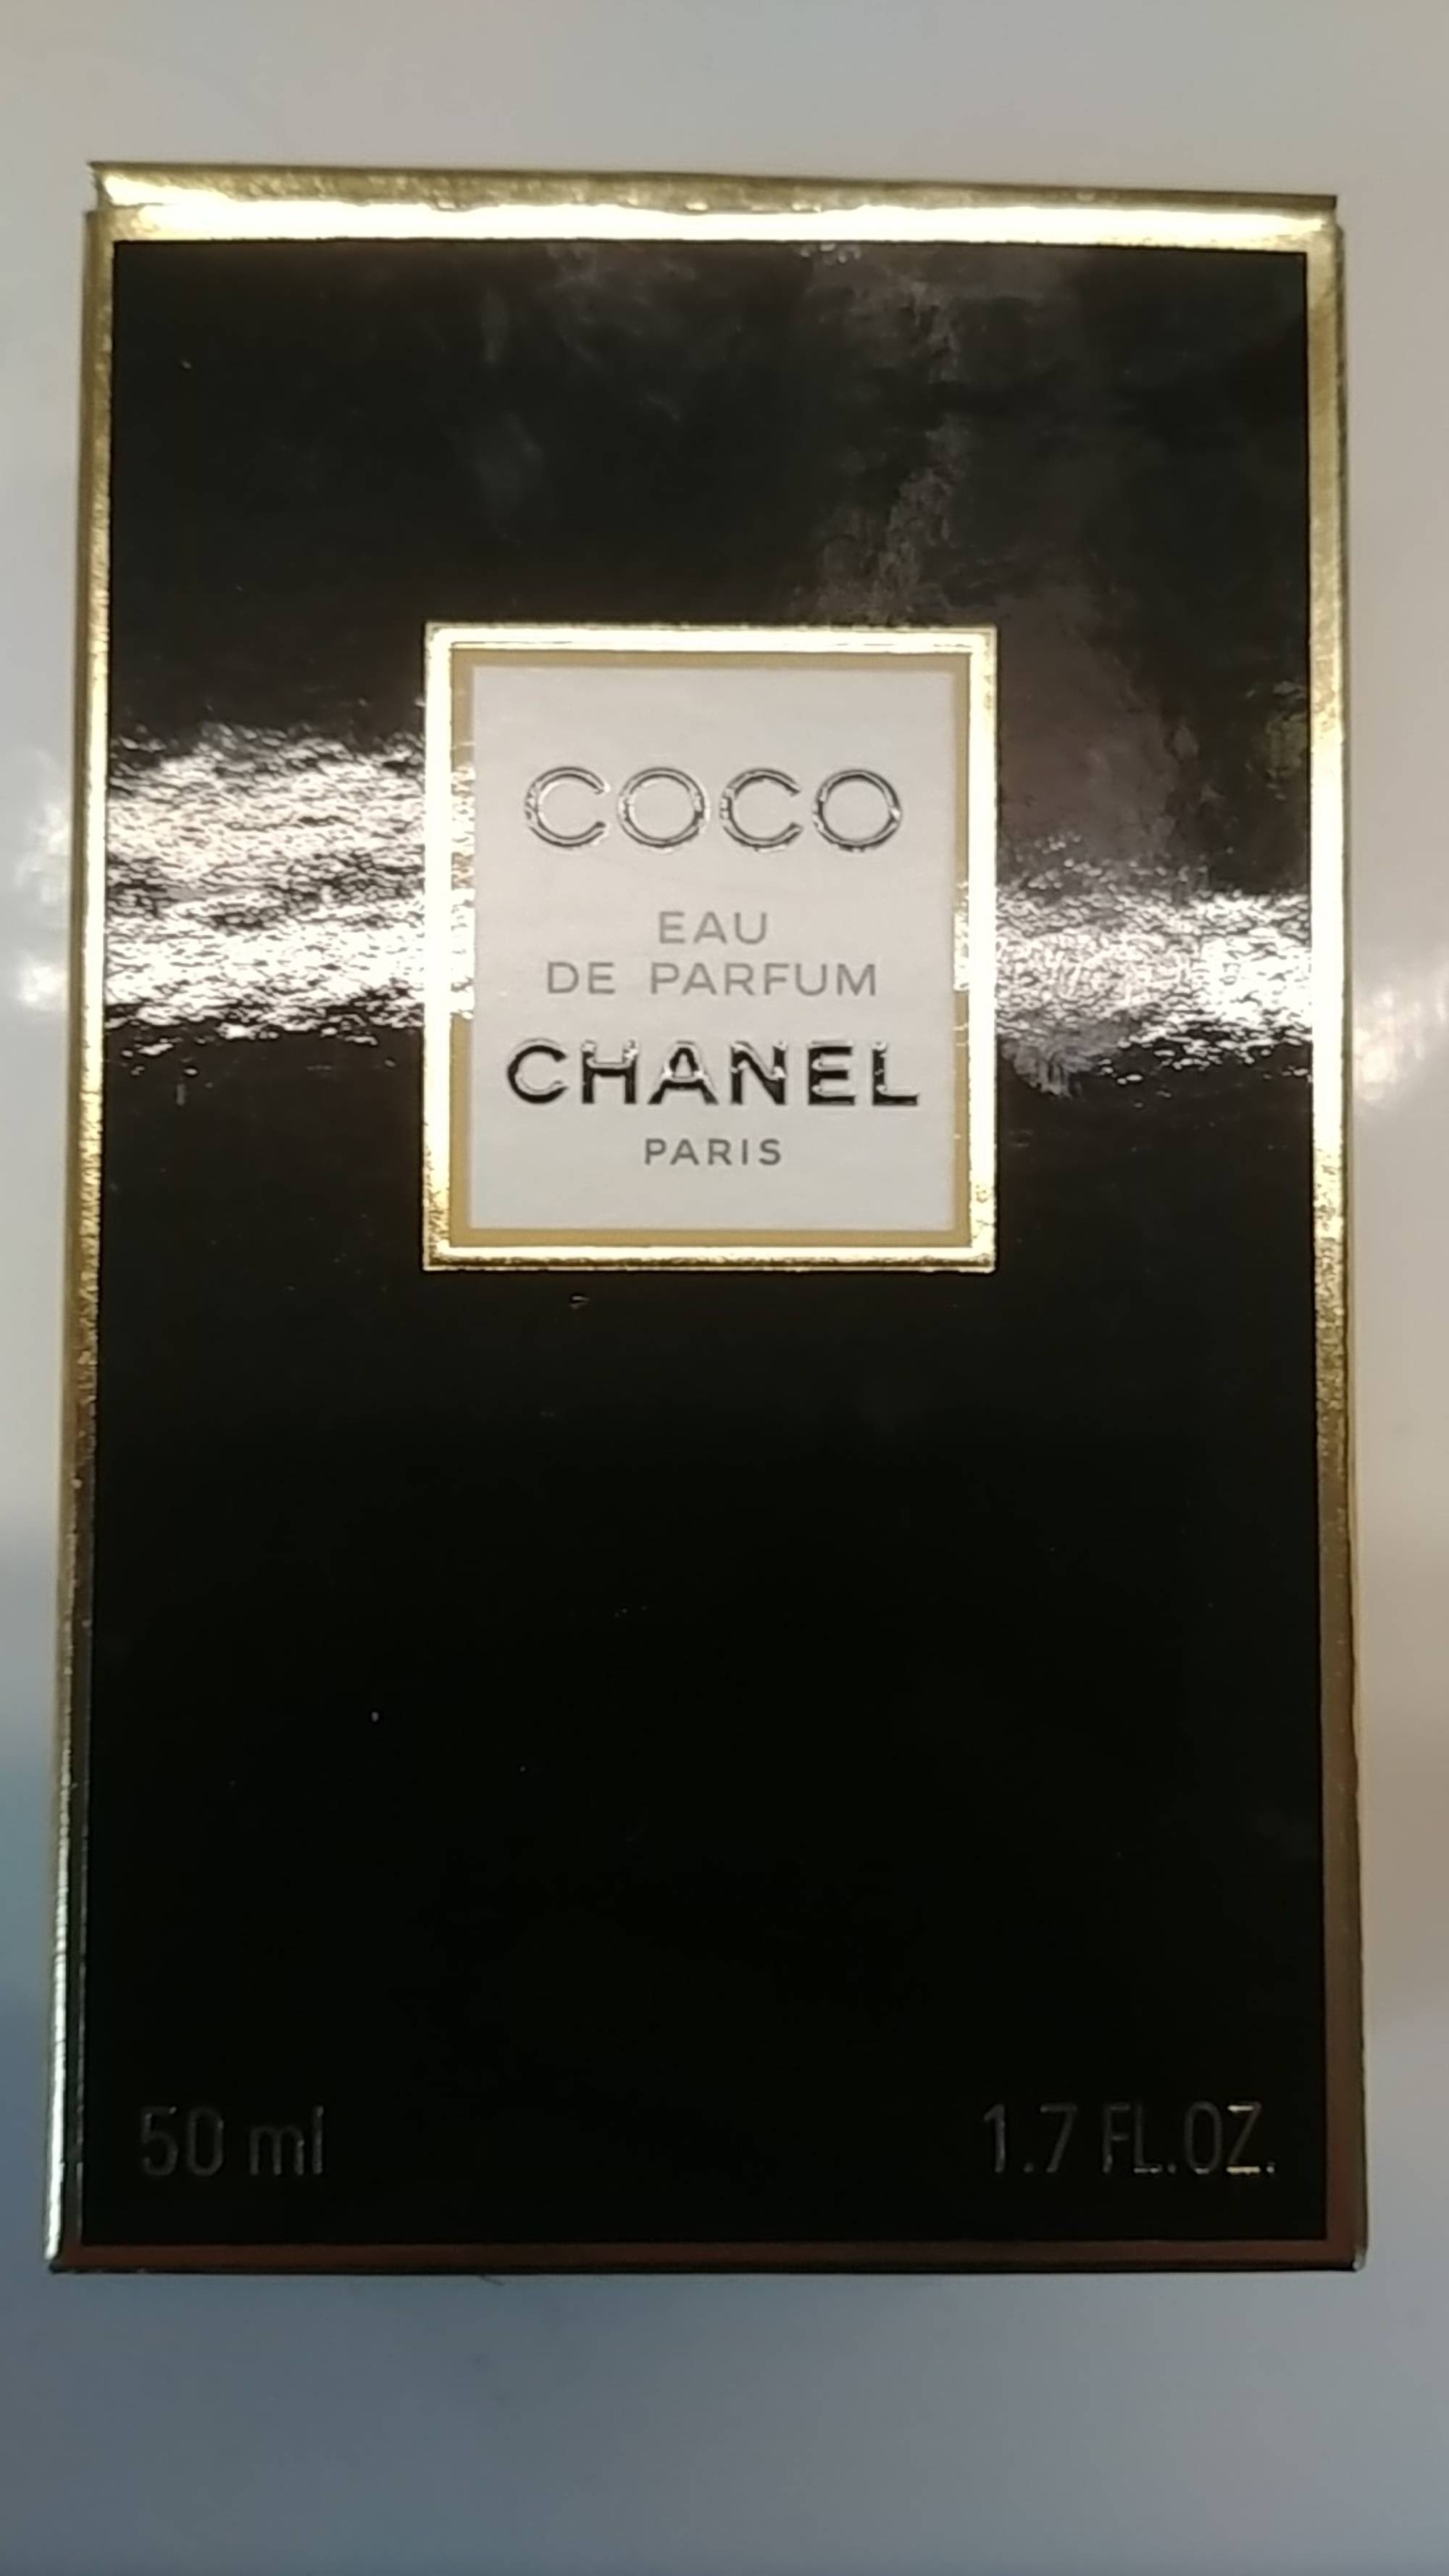 CHANEL - Coco - Eau de parfum 